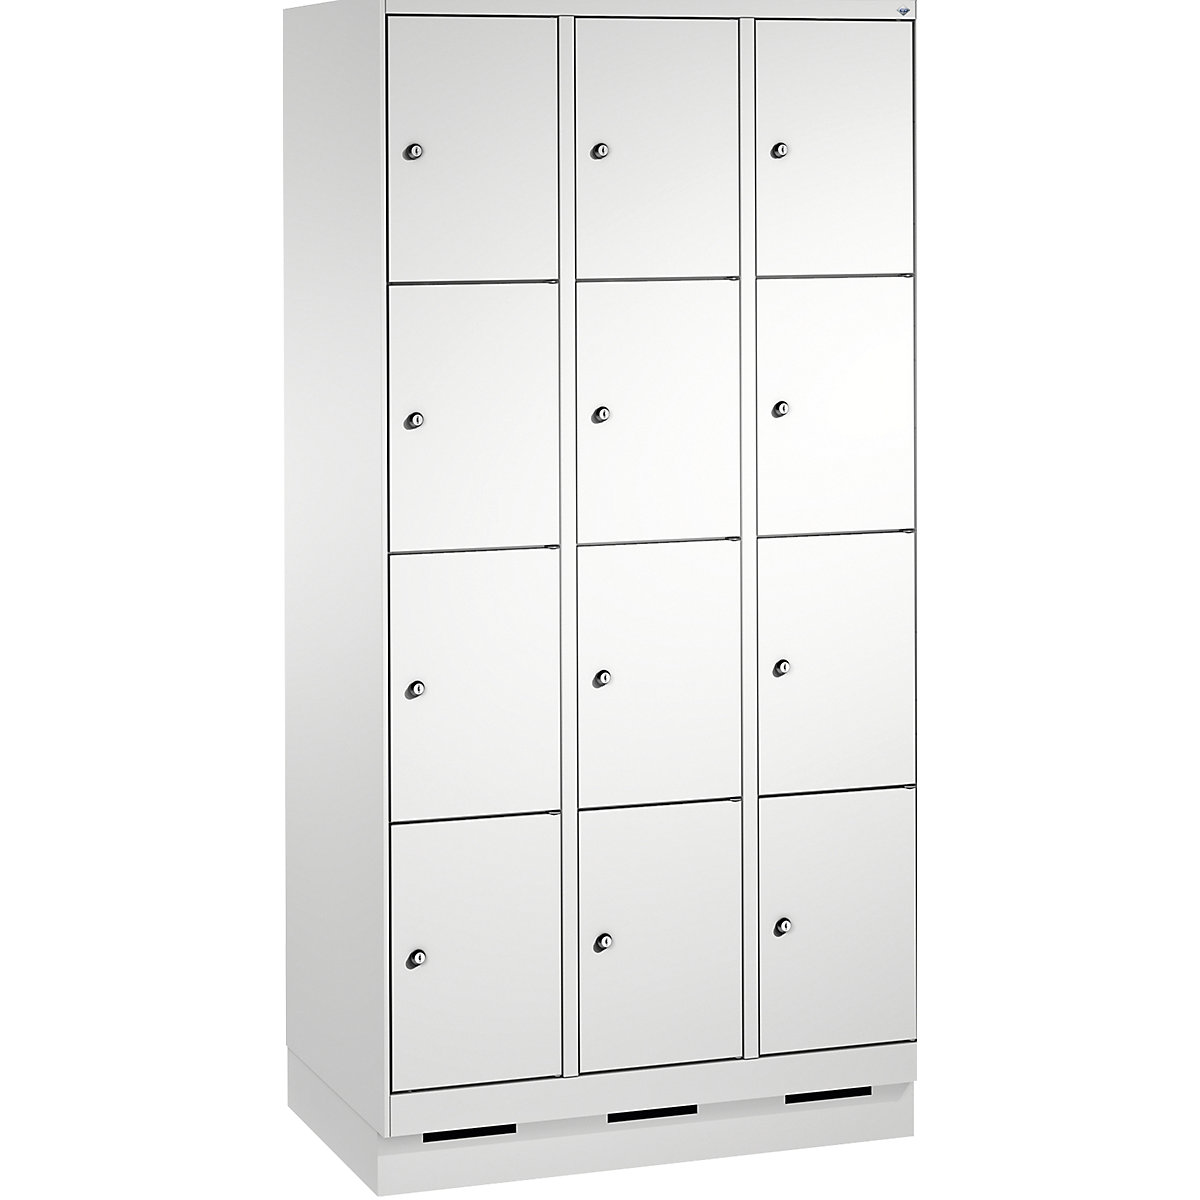 EVOLO locker unit, with plinth – C+P, 3 compartments, 4 shelf compartments each, compartment width 300 mm, light grey / light grey-7